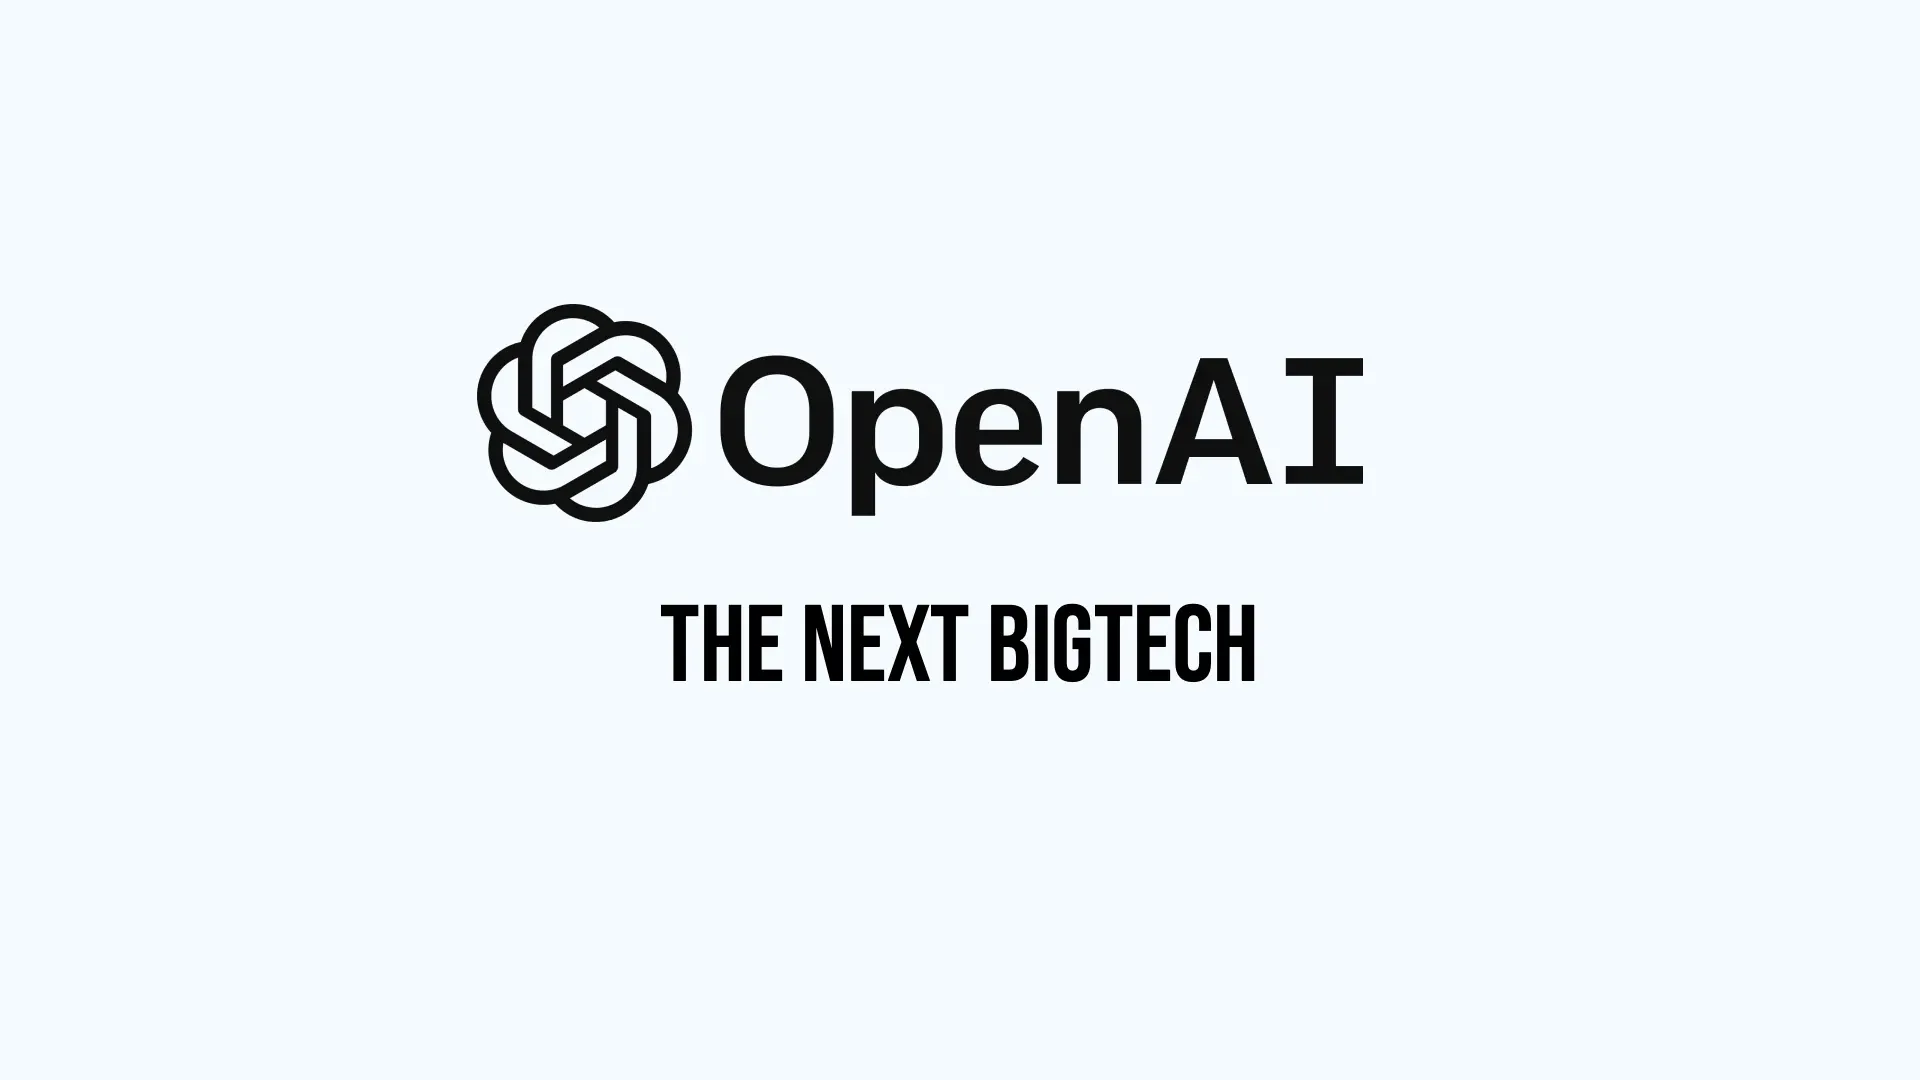 OpenAI sarà la prossima BigTech: supererà Google?